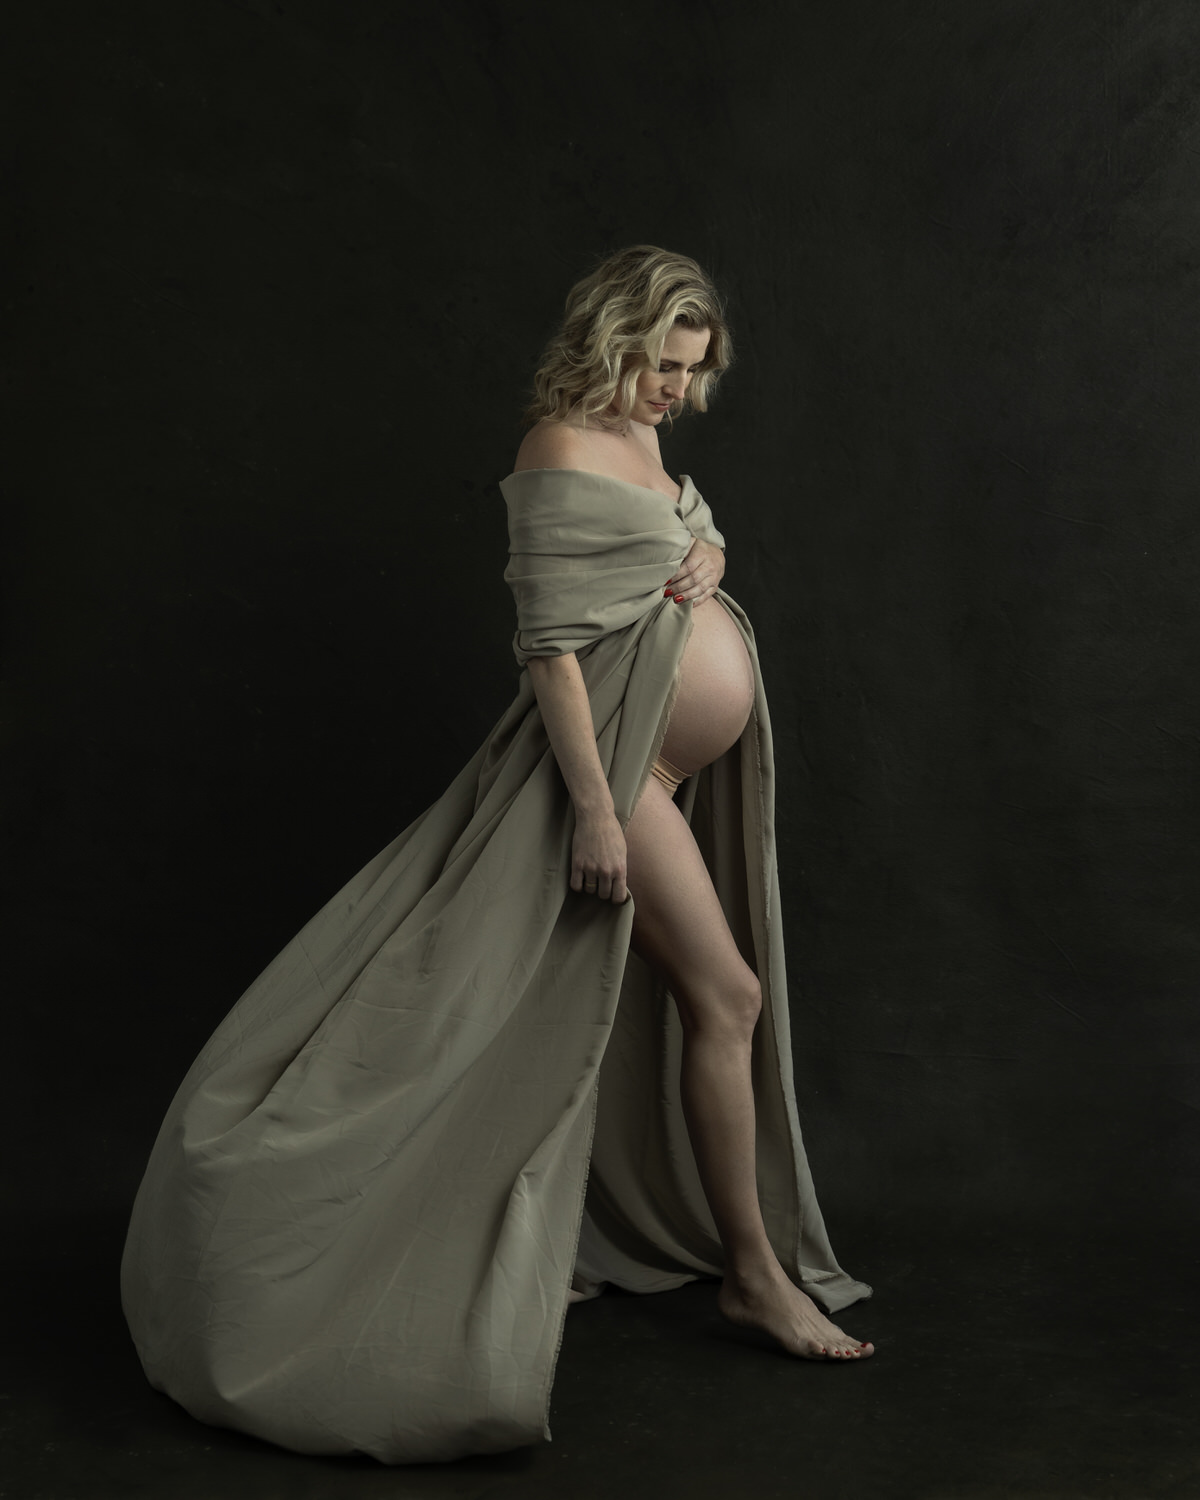 Pregnant woman wearing a flowy dress.